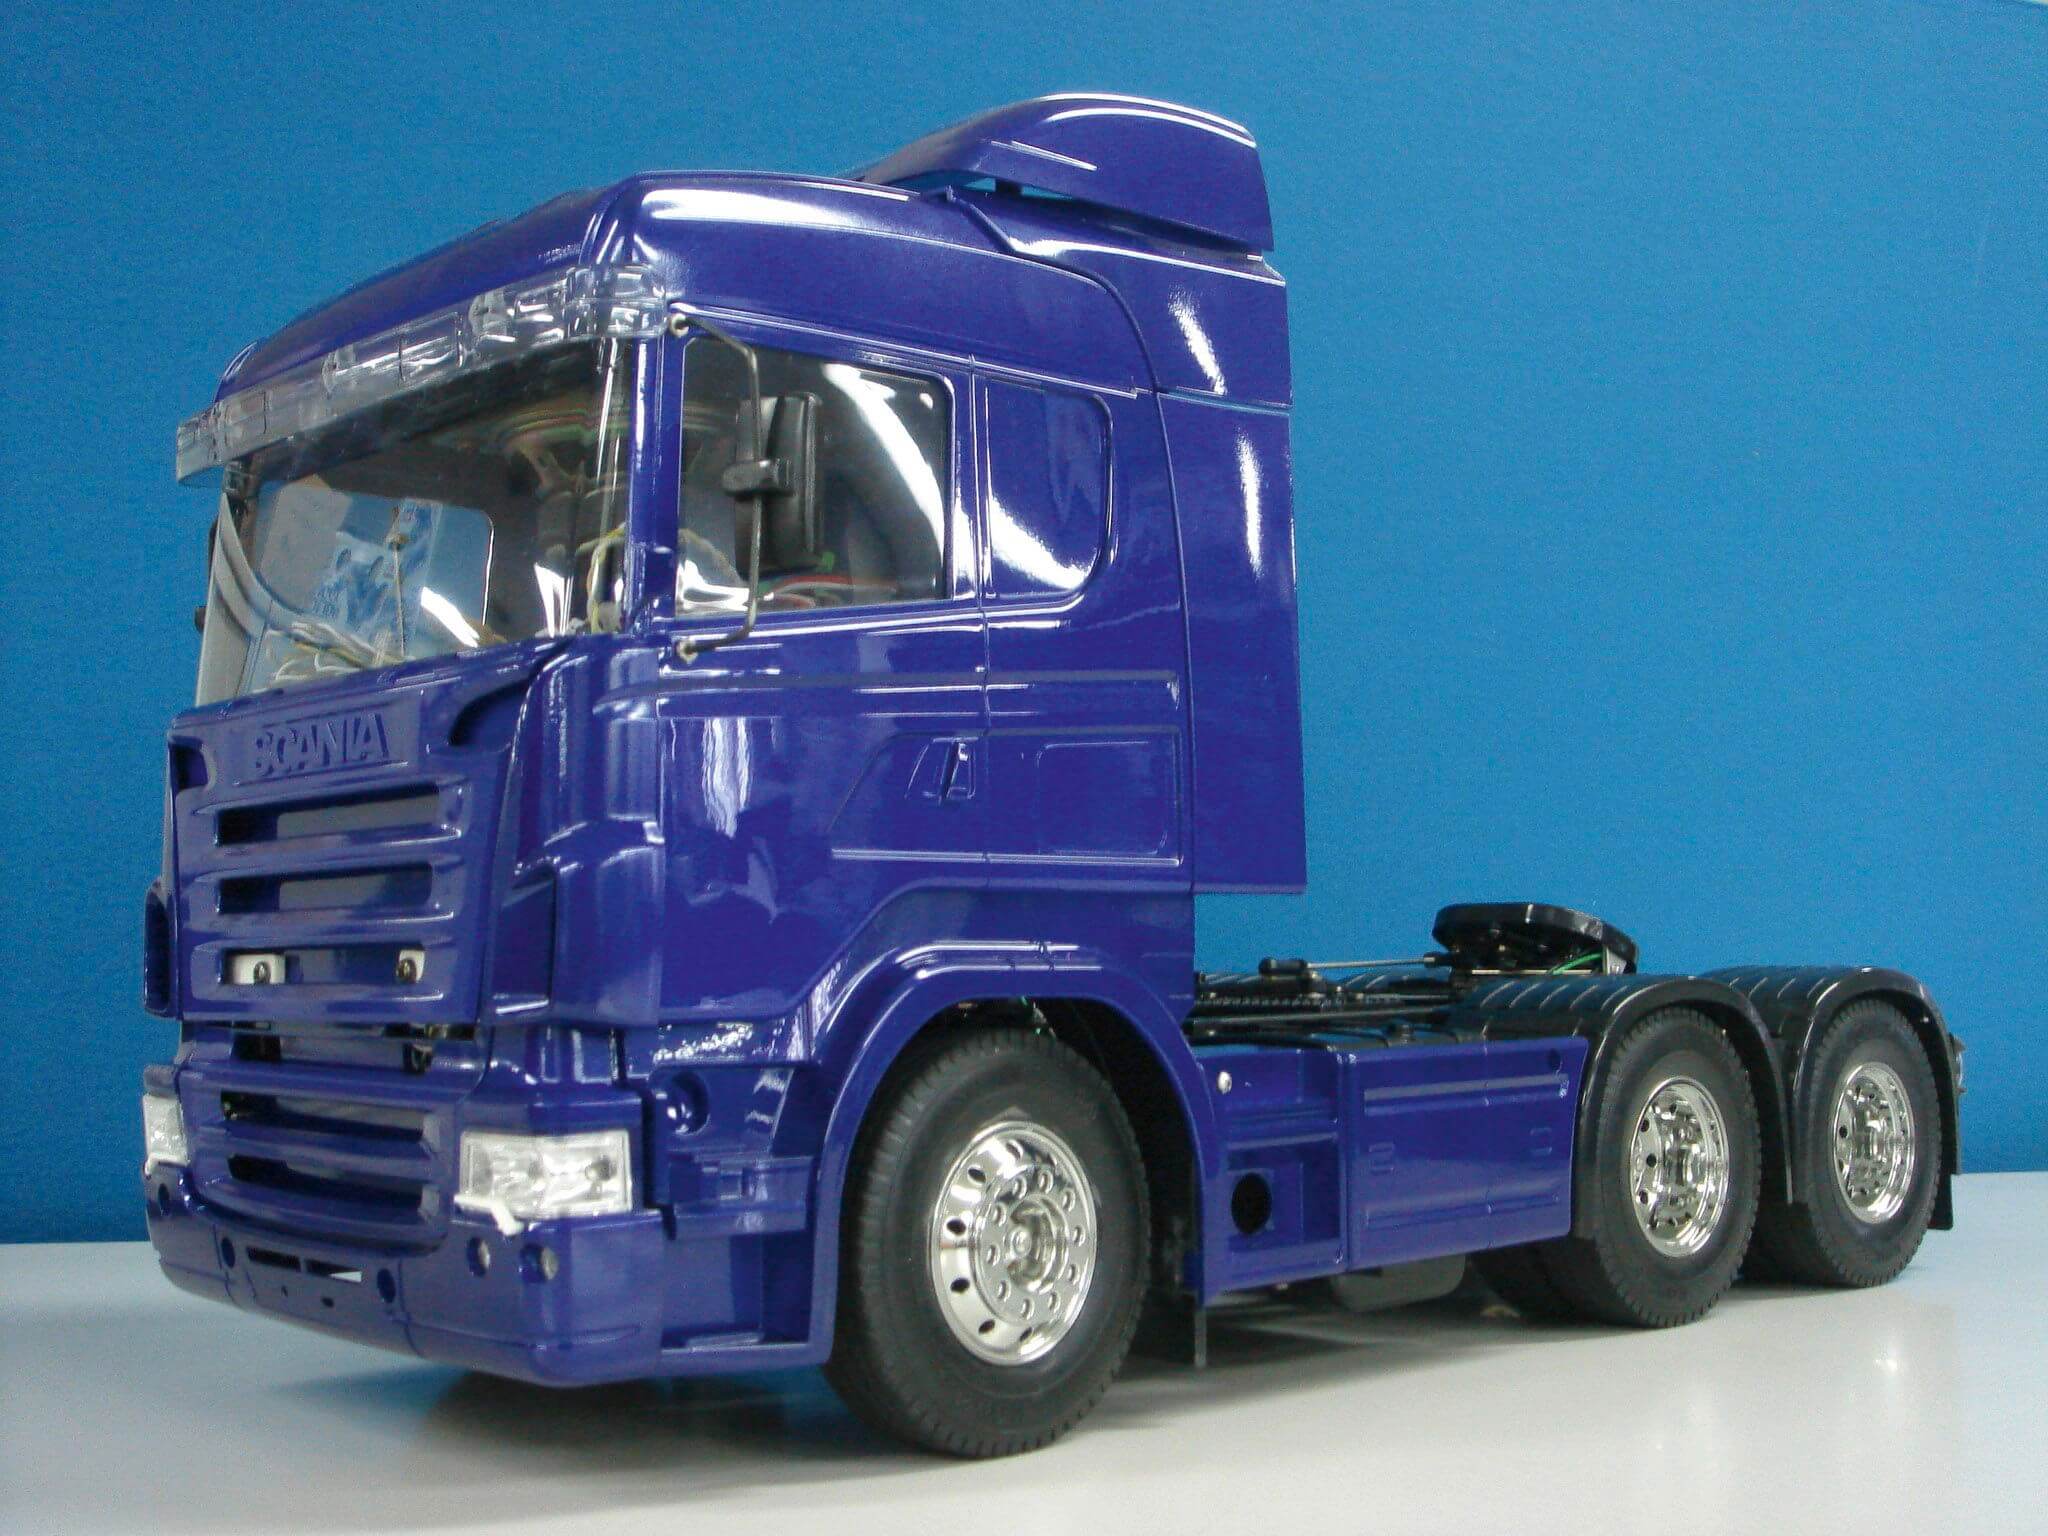 Tamiya Truck Scania 770 S 6x4 Bausatz vorlackiert